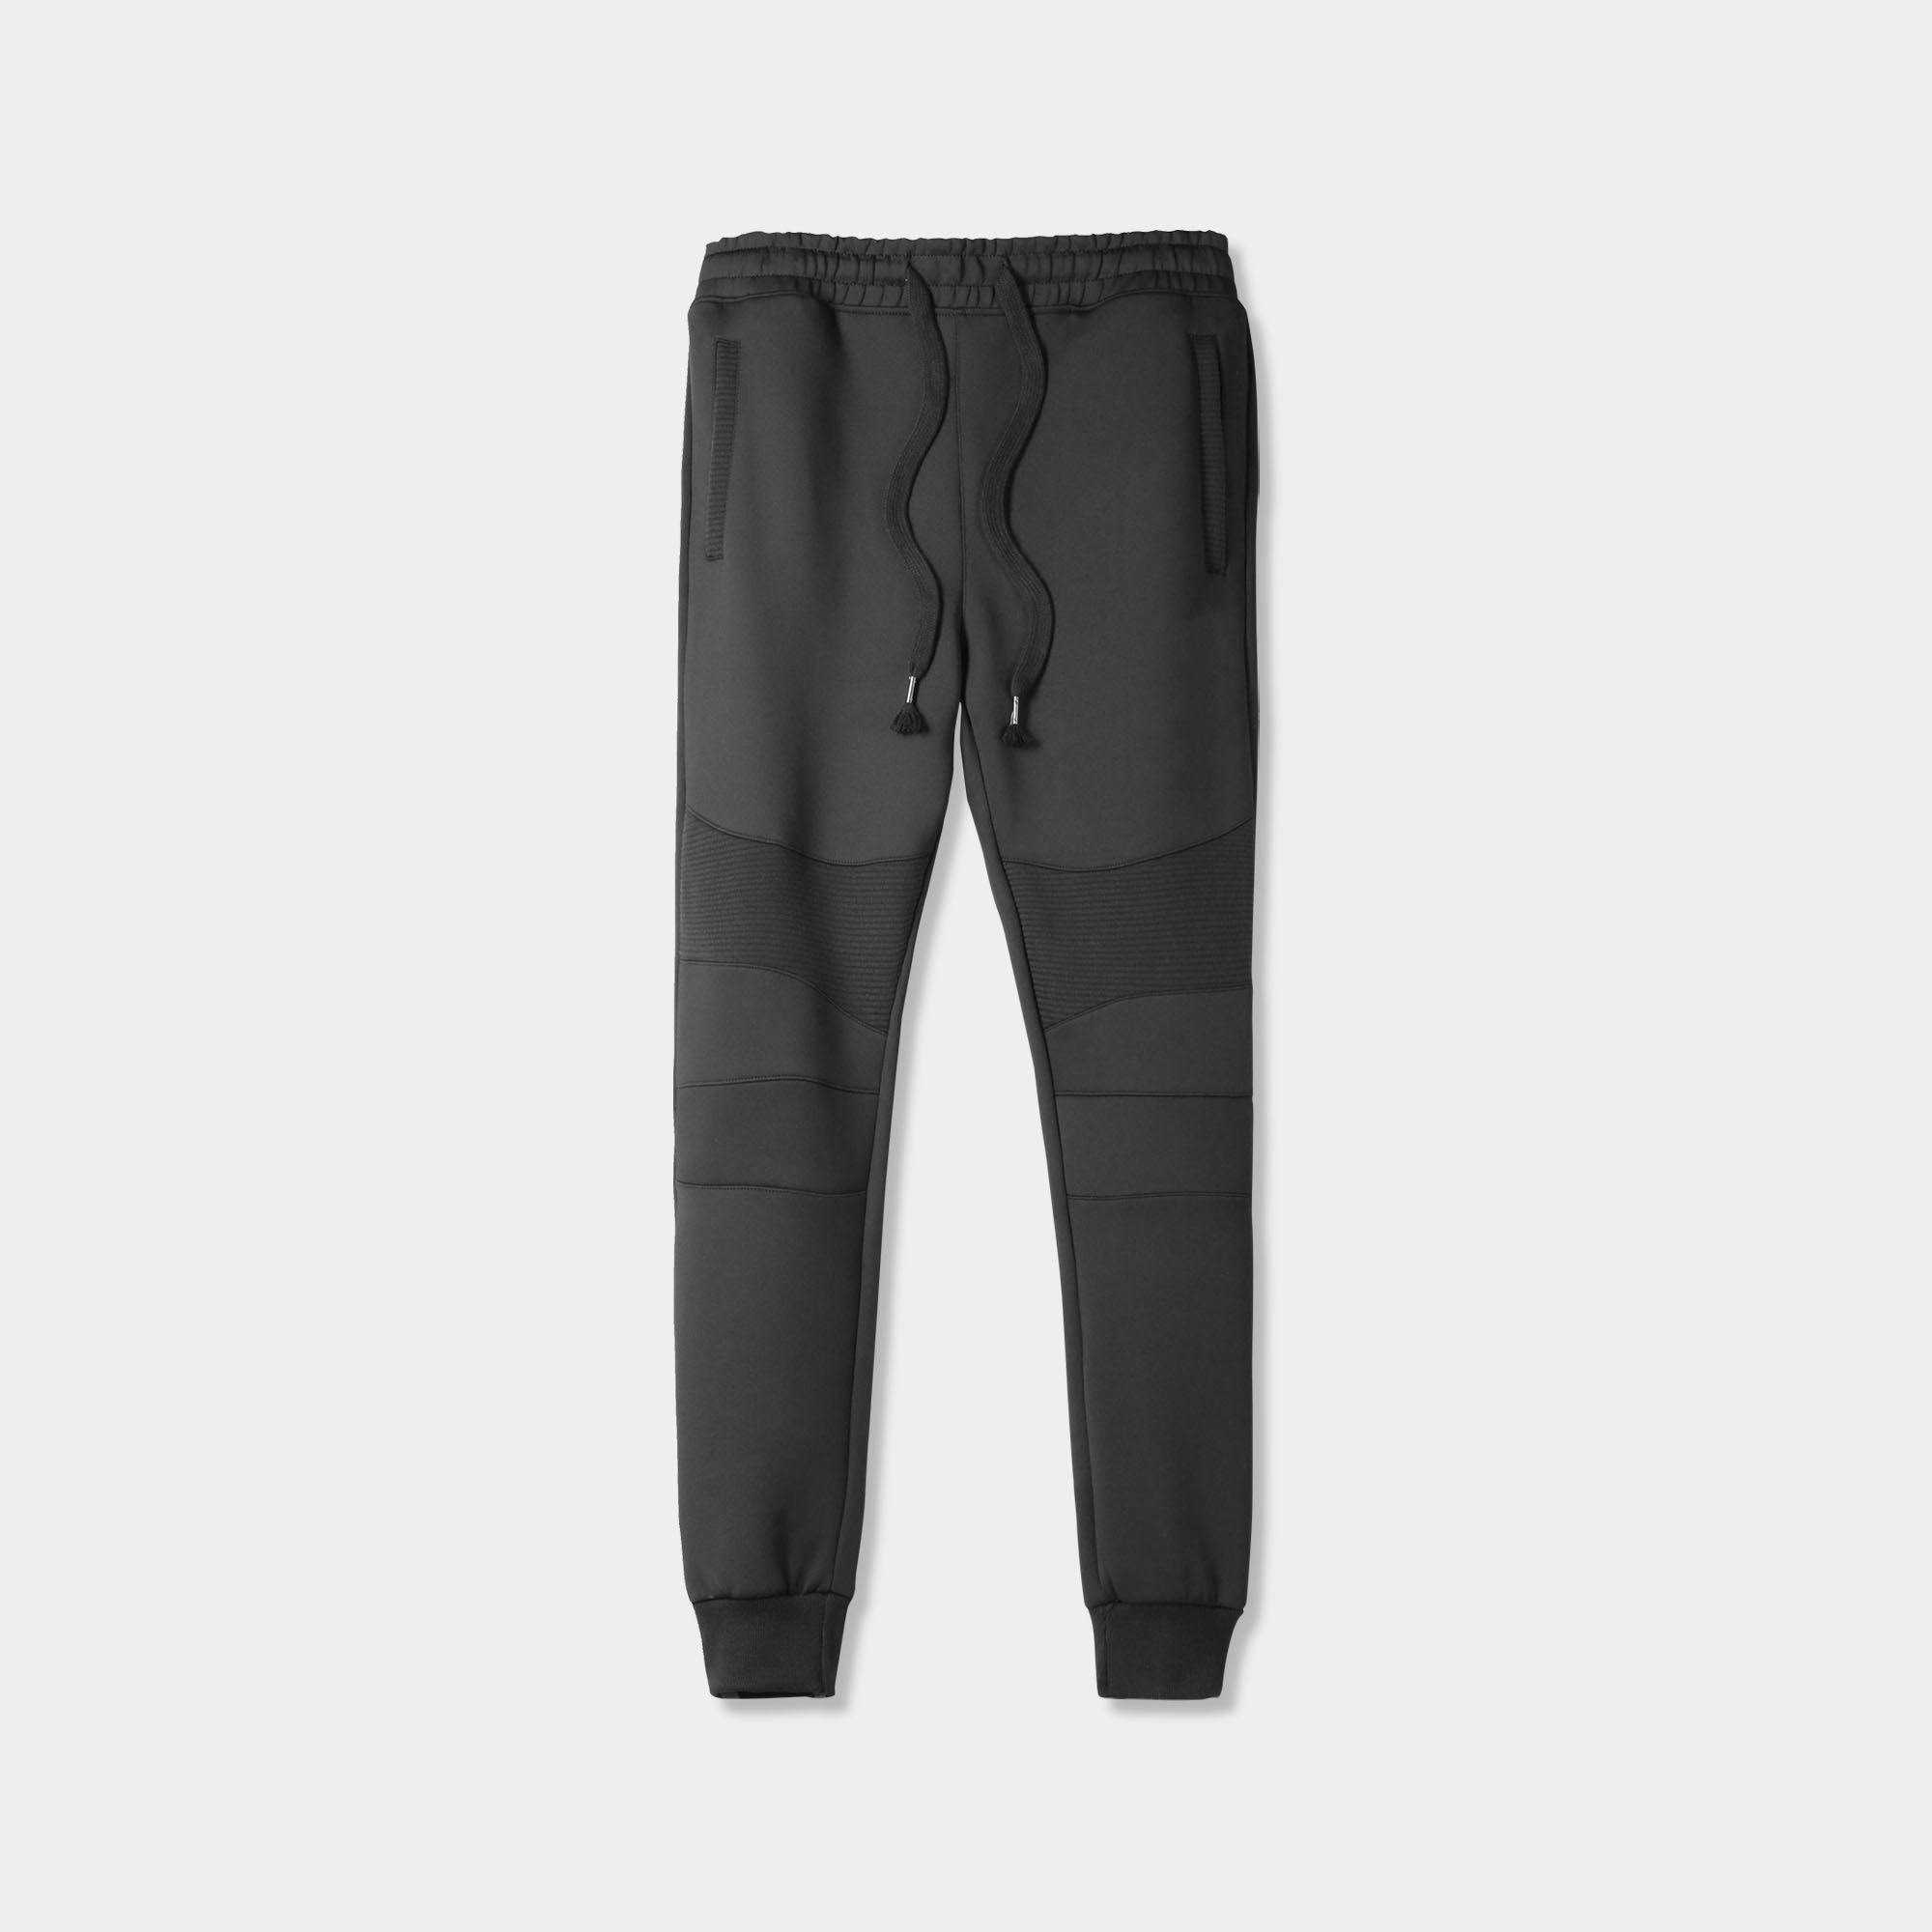  G-Star Men's Moto Graphic Sweatpants, Black, Small